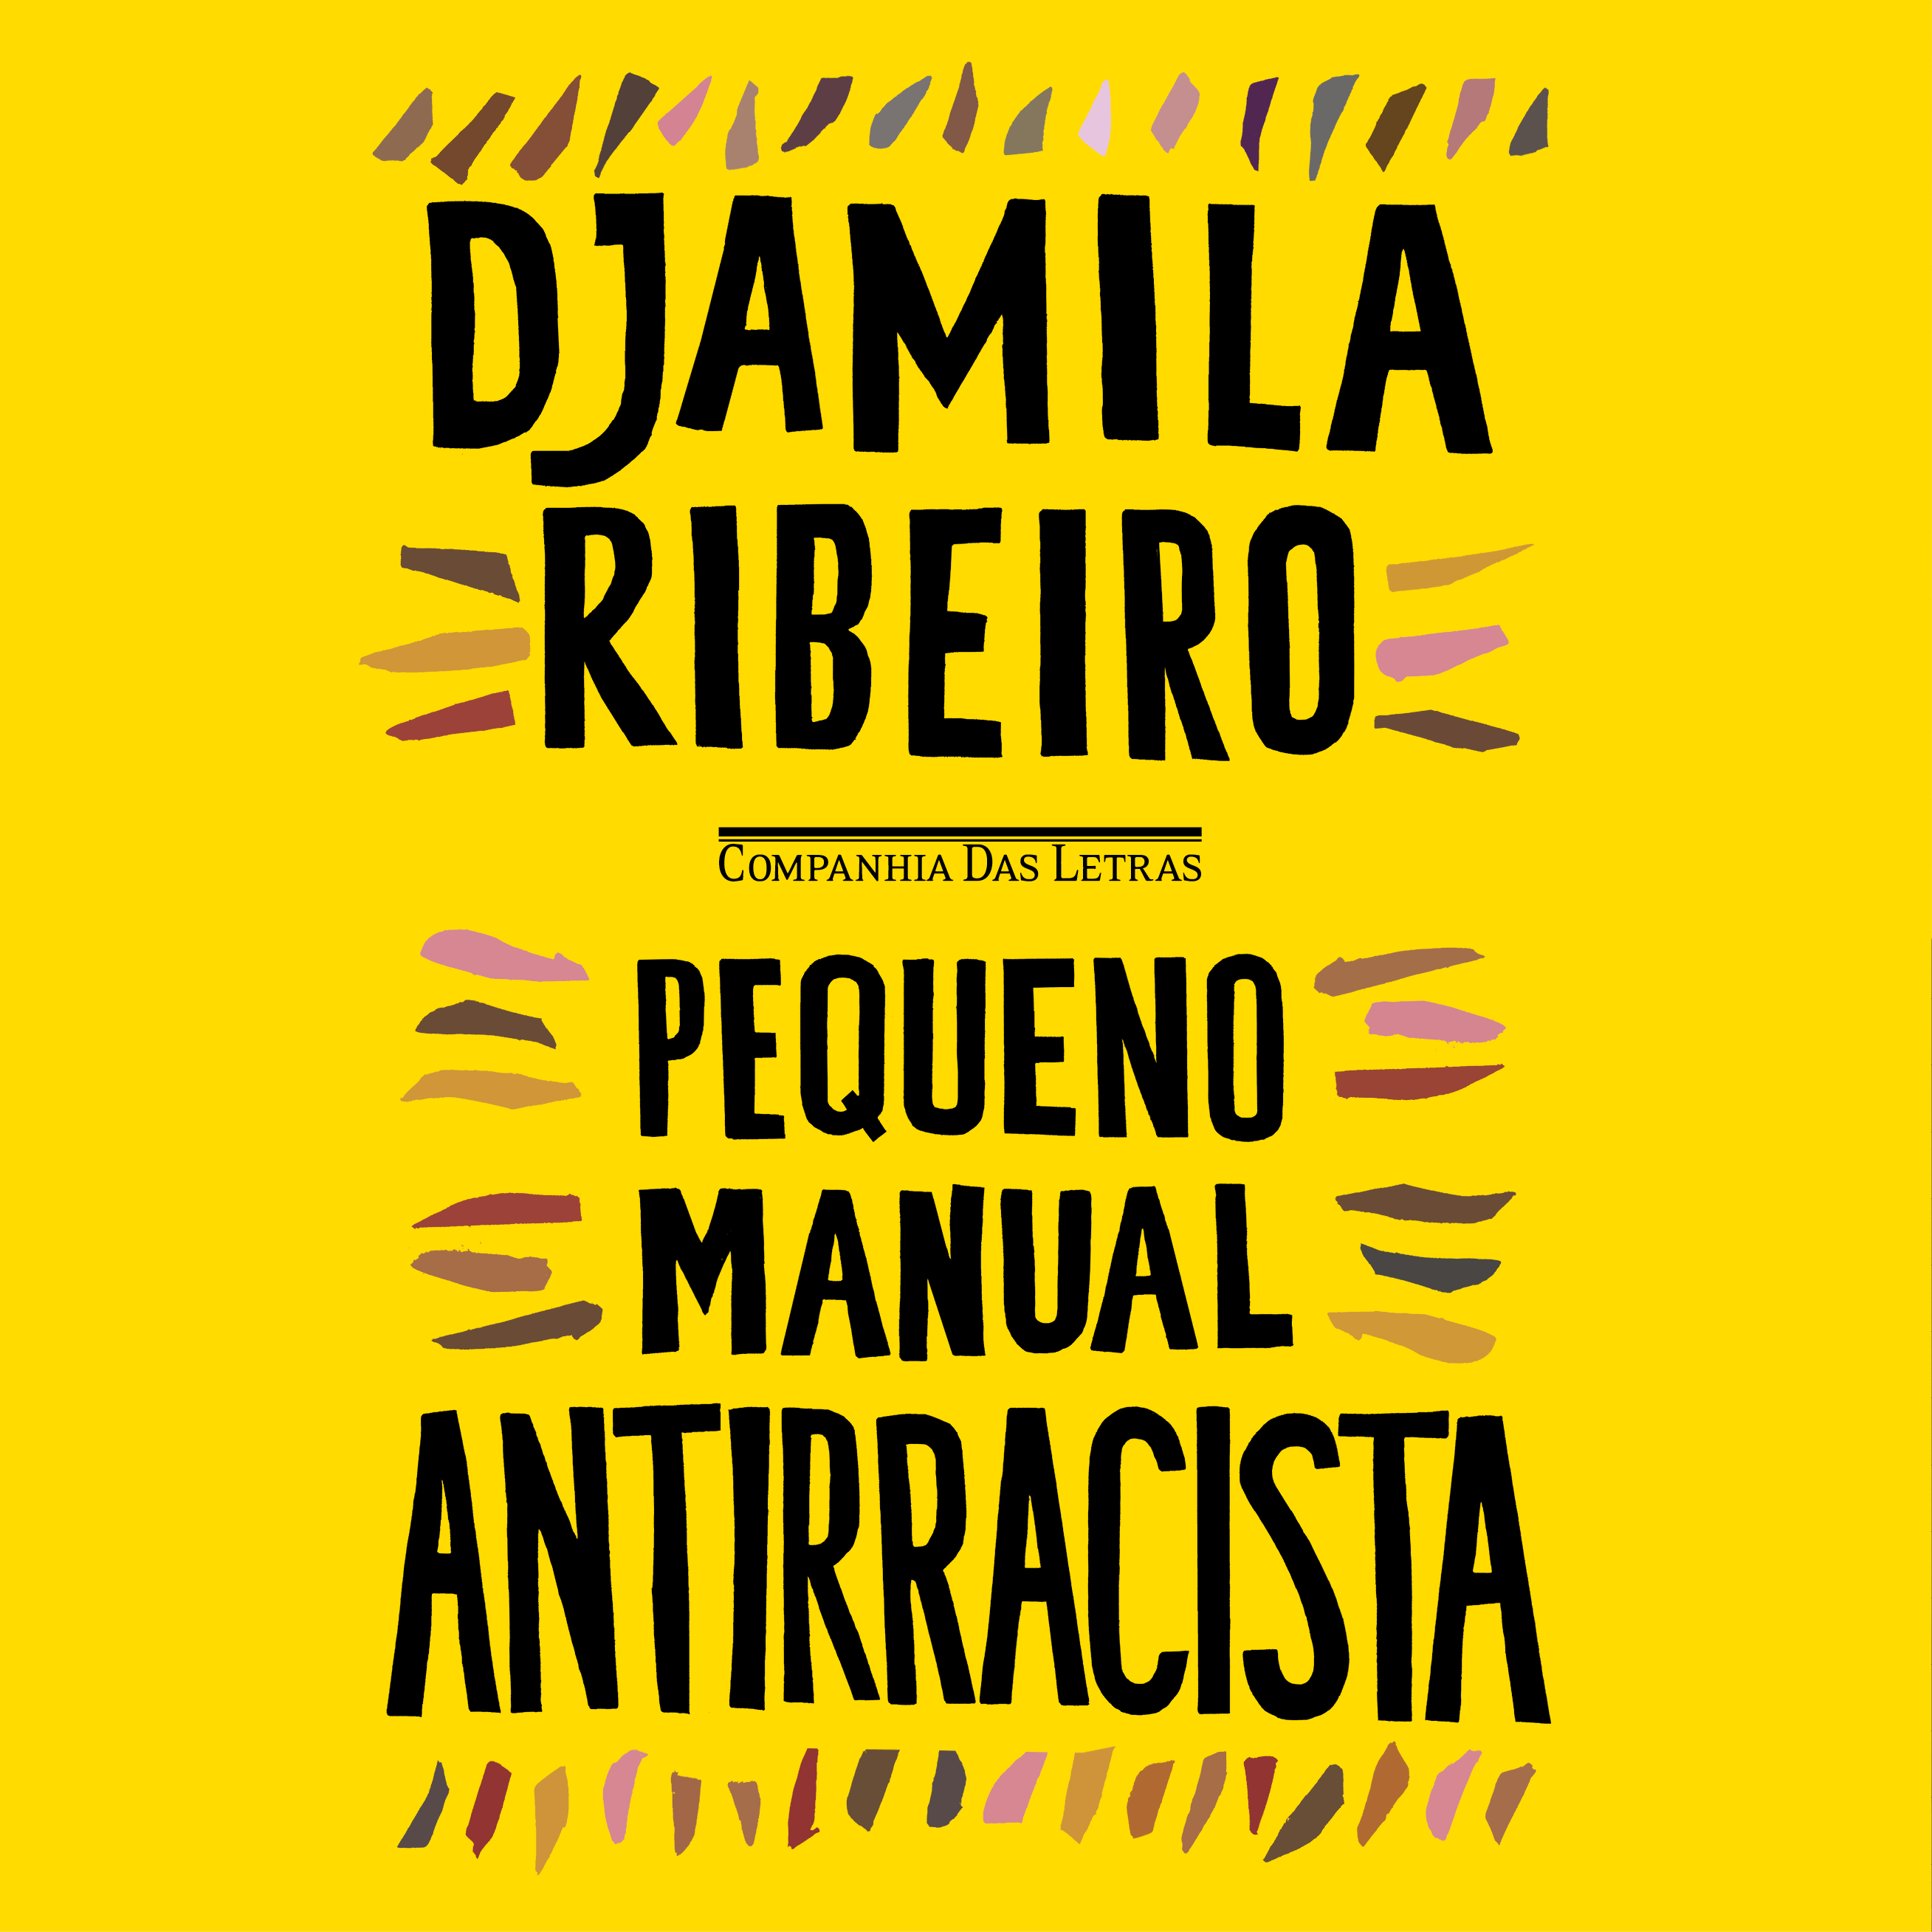 Pequeno manual antirracista, de Djamila Ribeiro